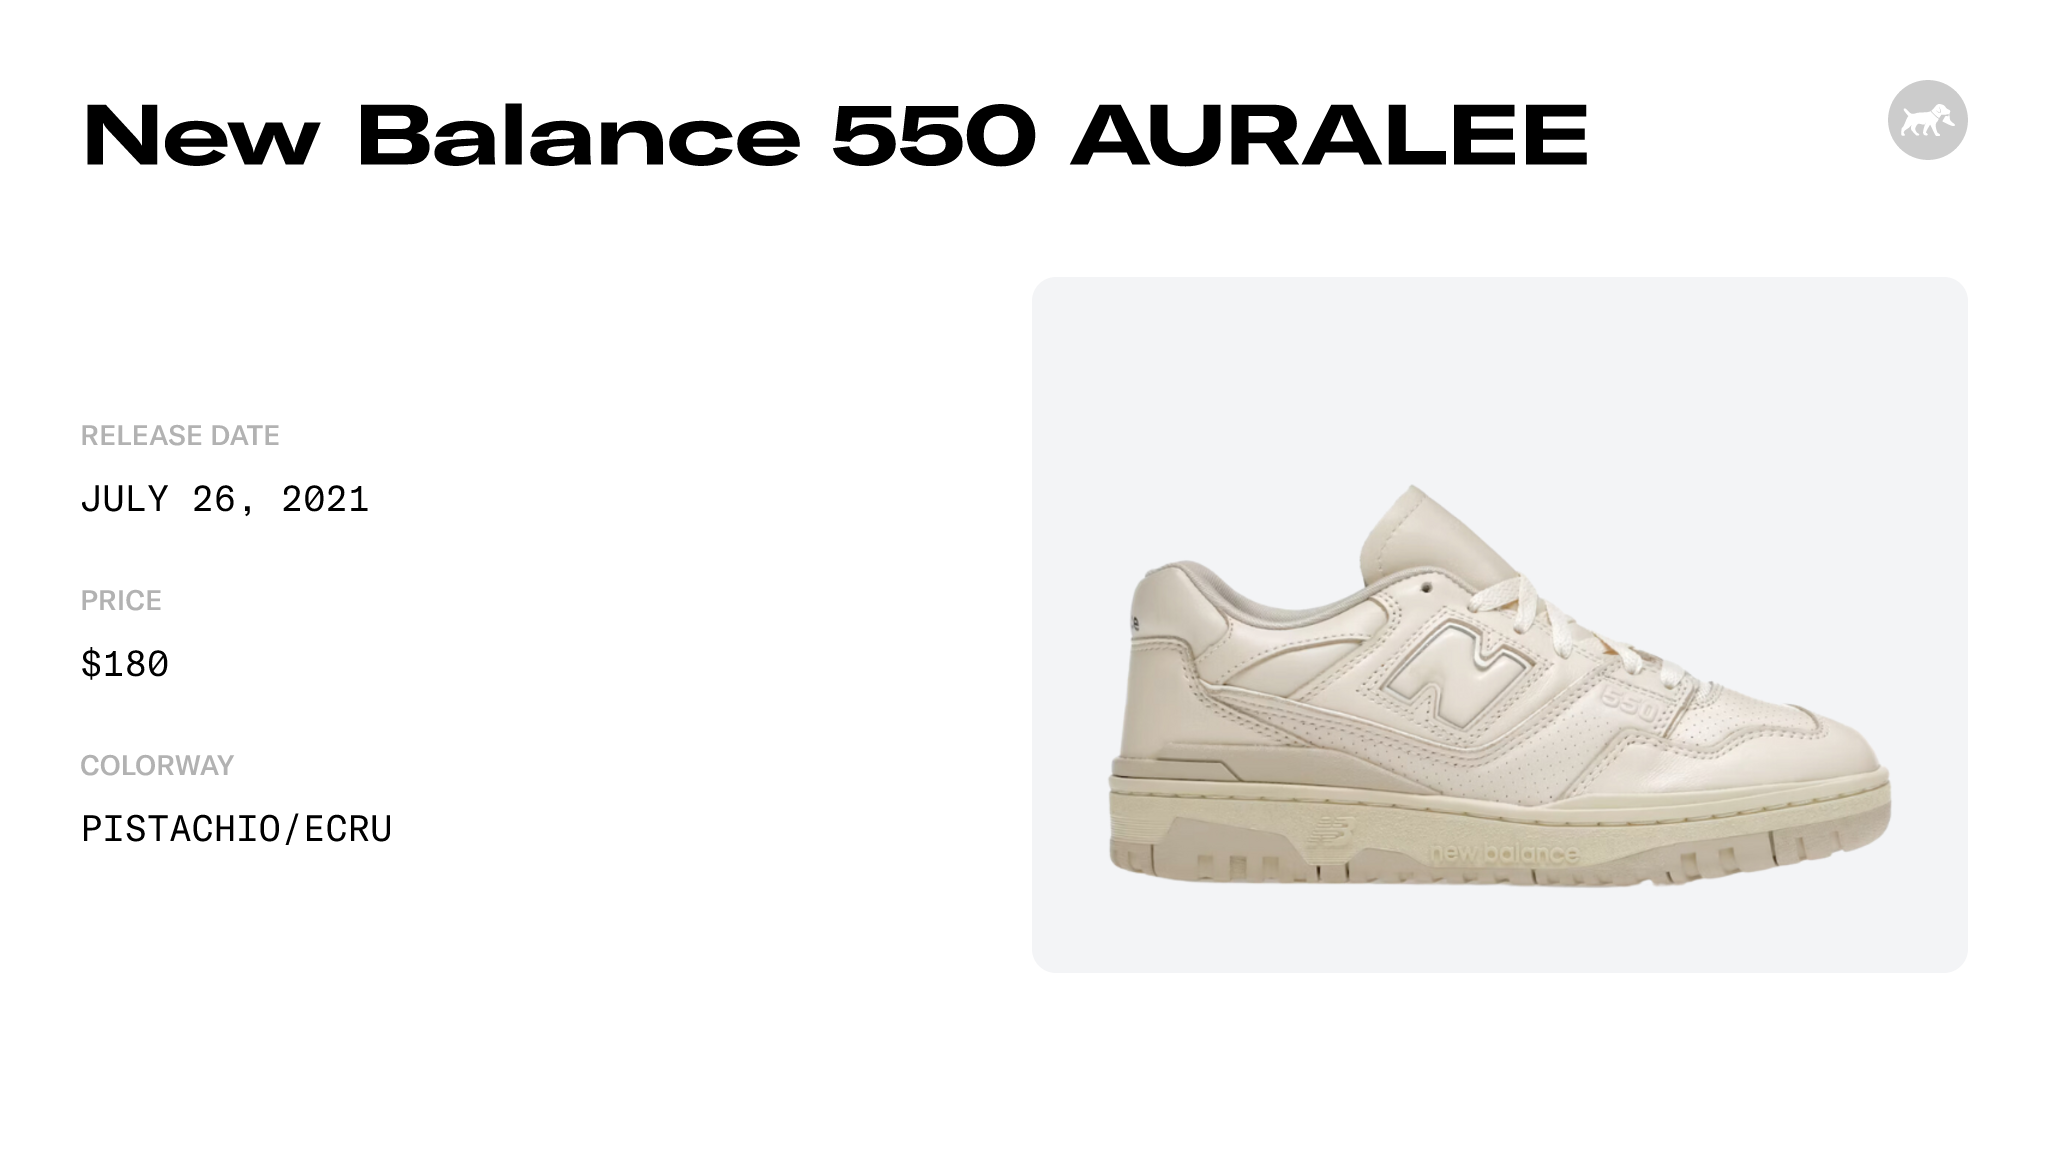 New Balance 550 AURALEE - BB550AR Raffles and Release Date